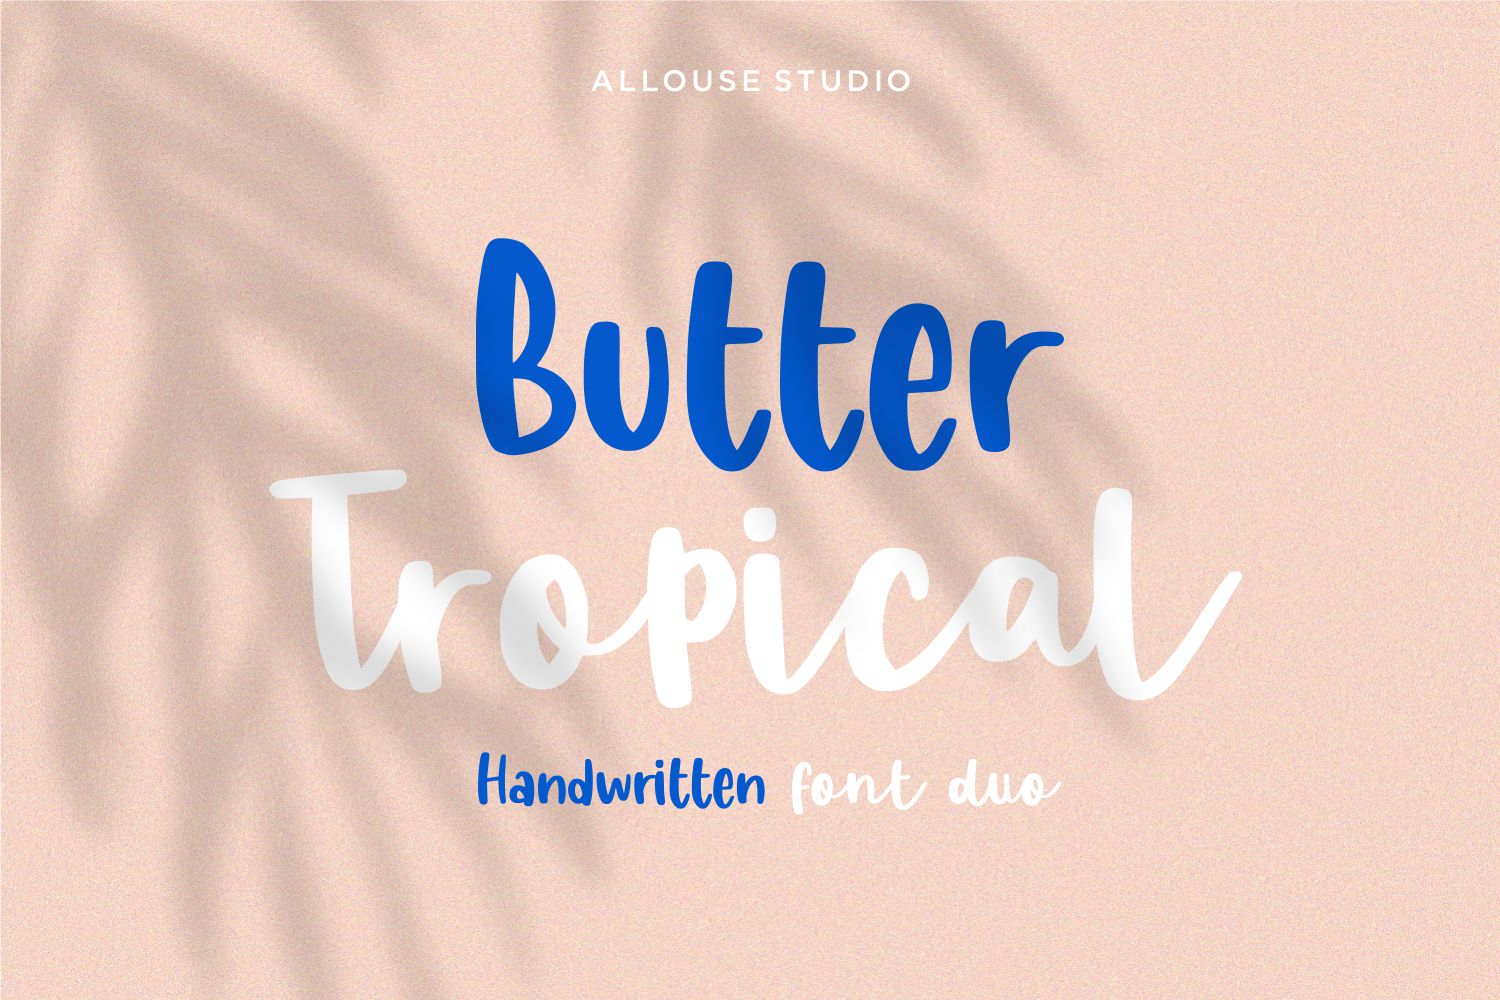 Butter Tropical Script Demo Ver